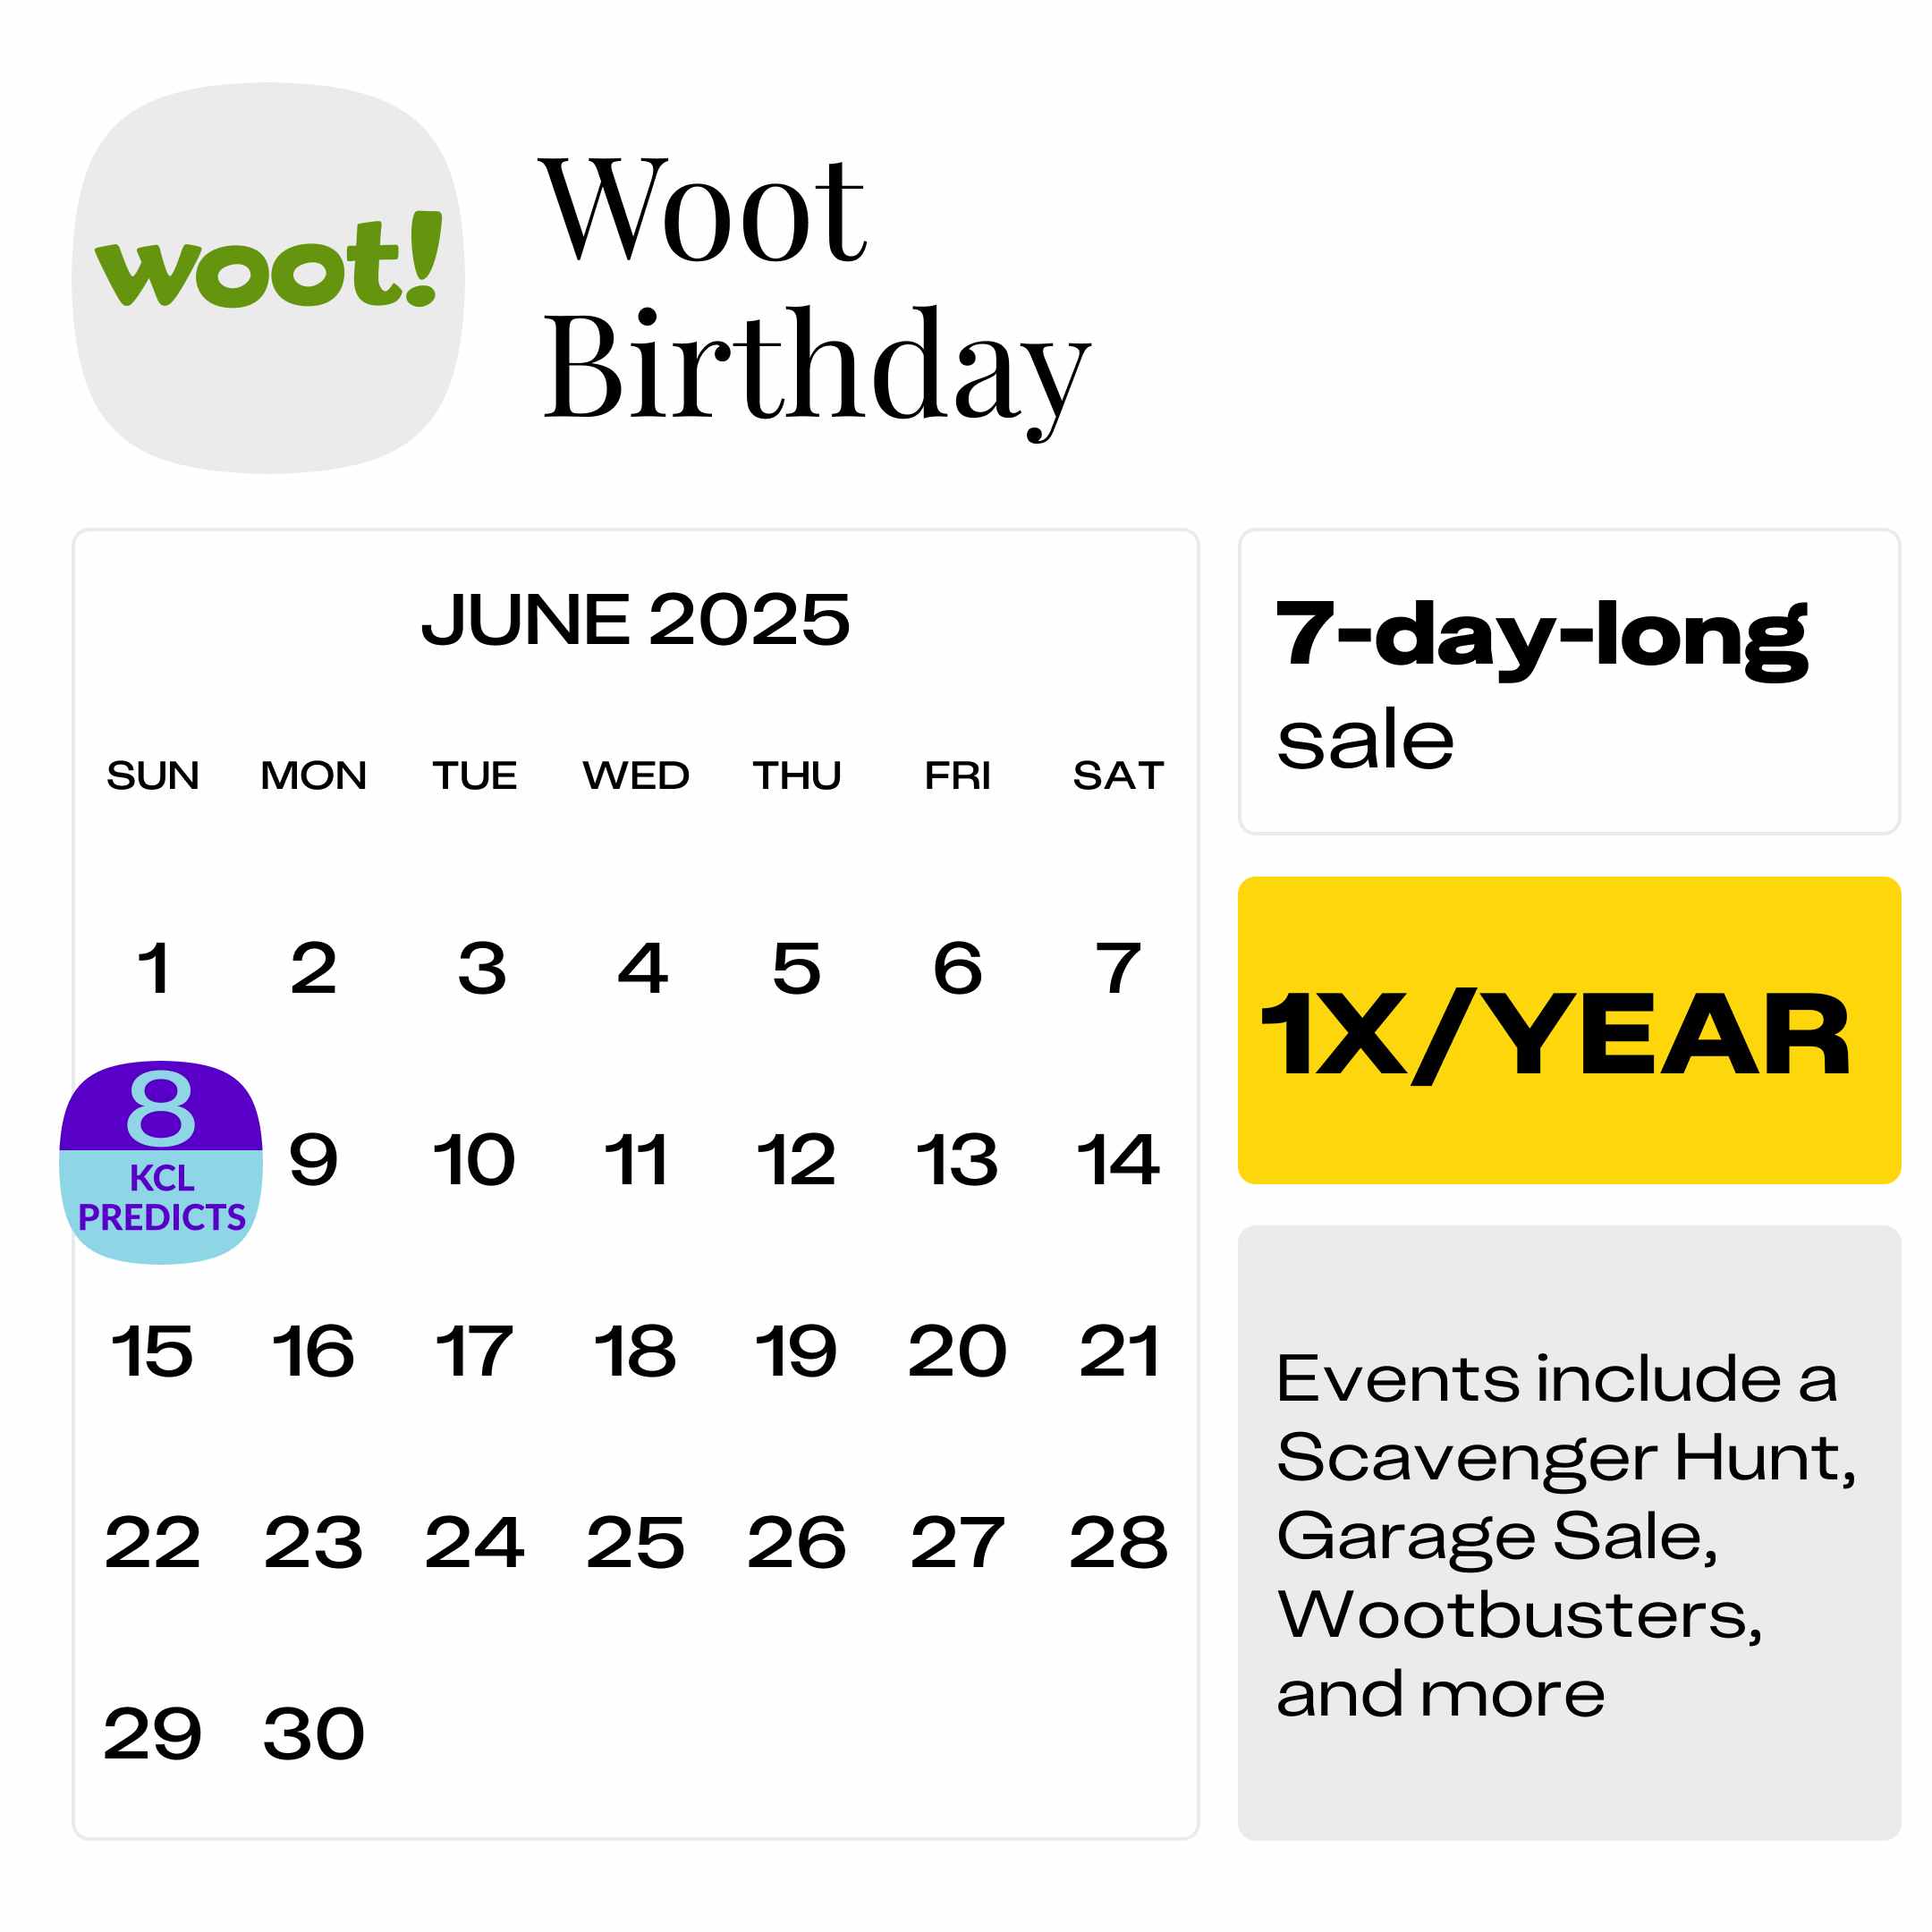 Woot-Birthday-2025 Prediction